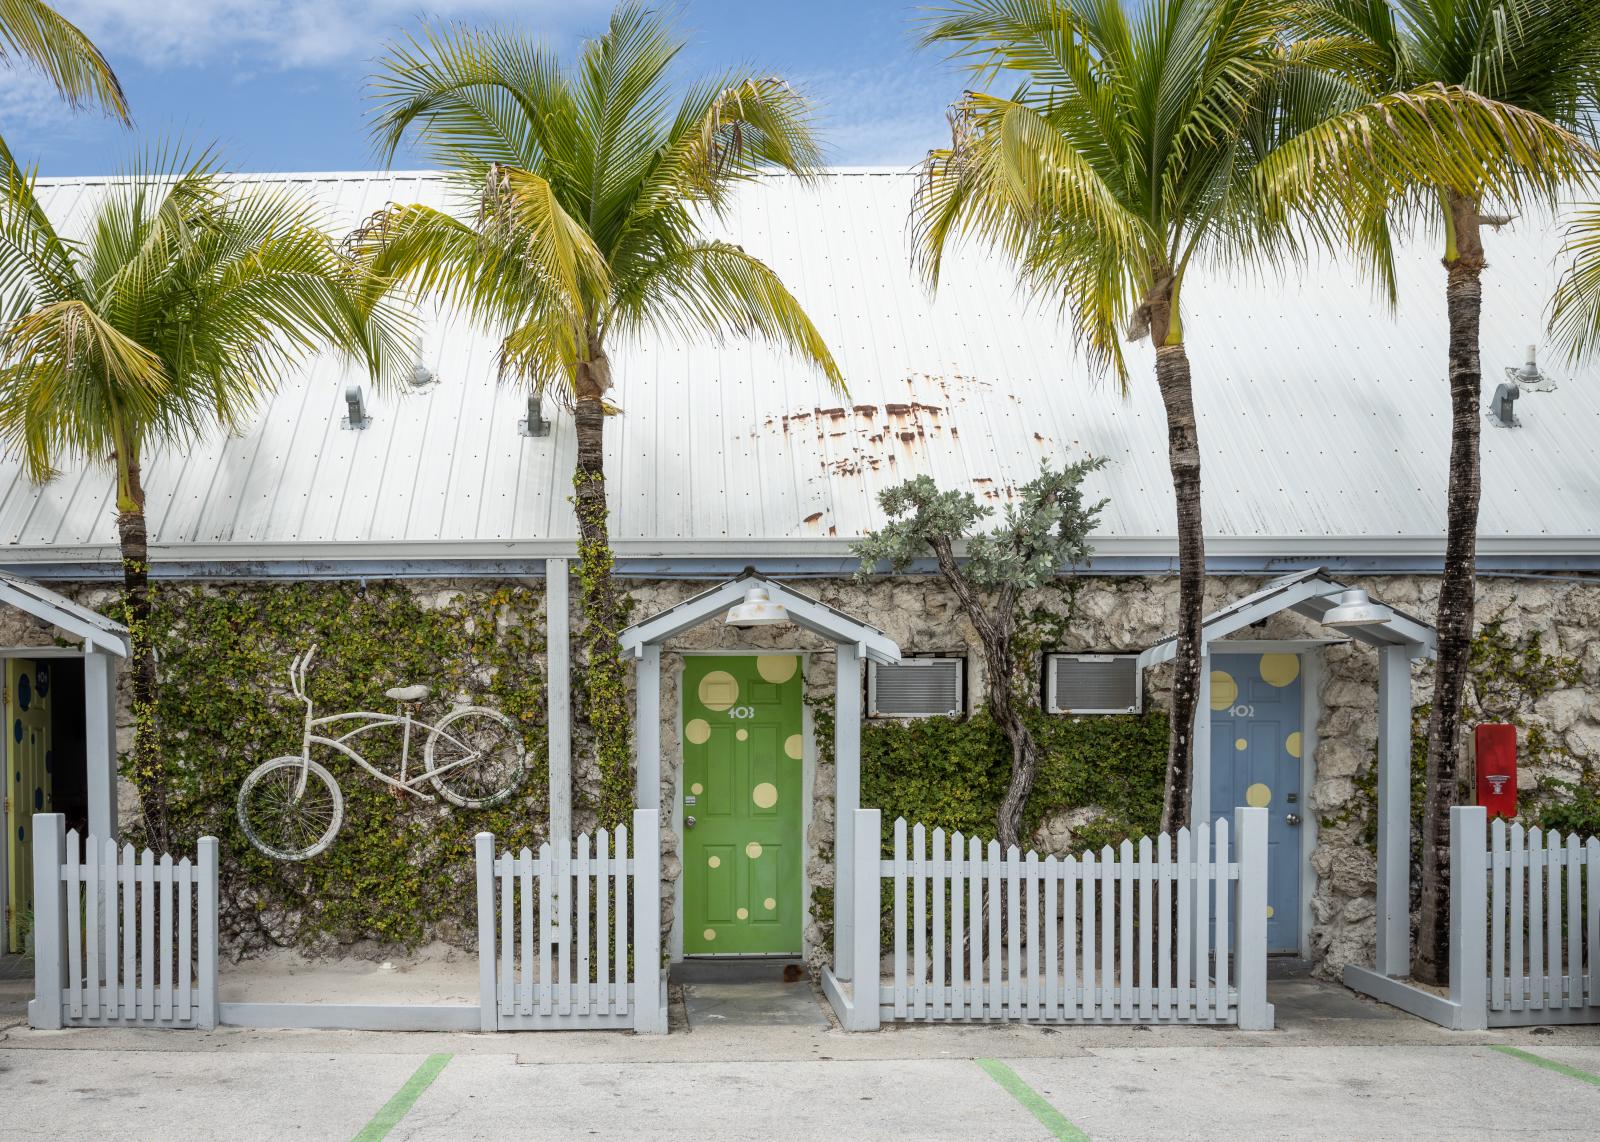 Ibis Bay Beach Resort, Key West